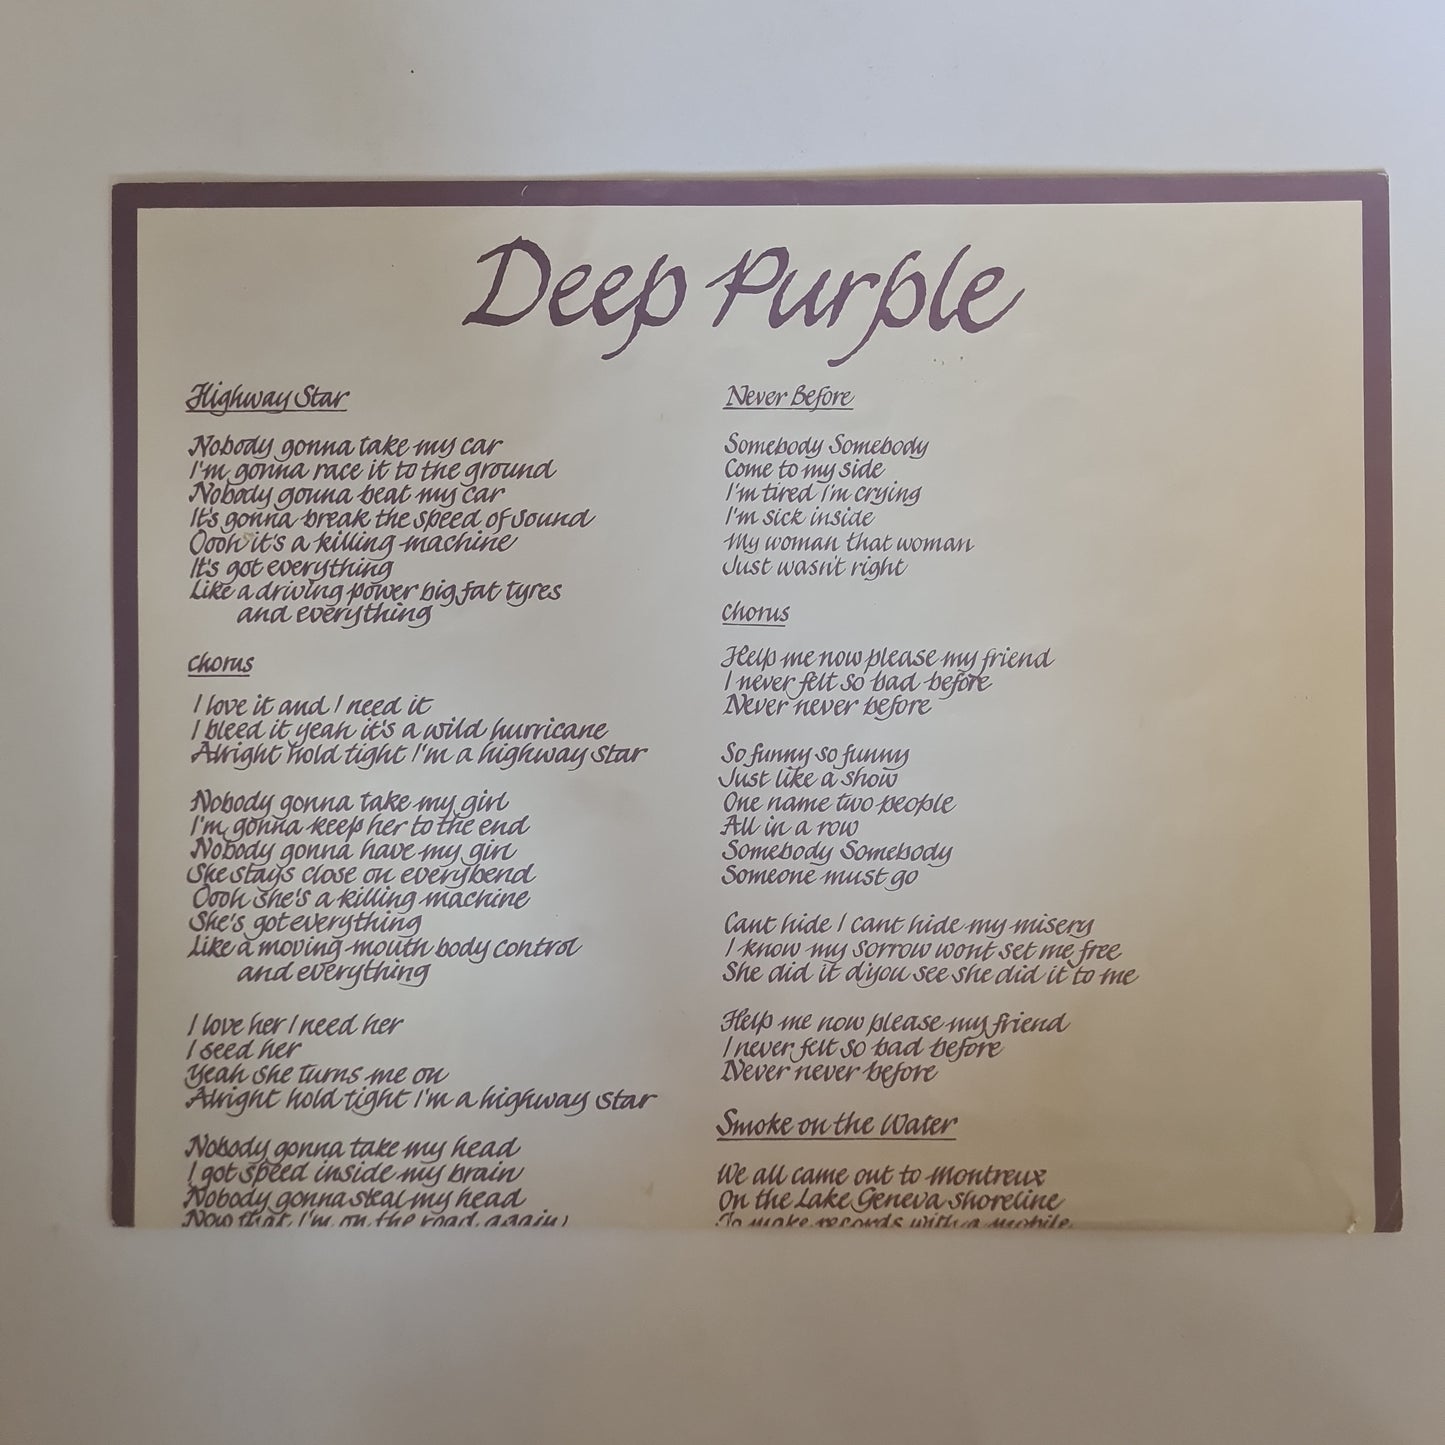 Deep Purple – Machine Head - 1972 (Gatefold with fold out lyric sheet) - Vinyl Record